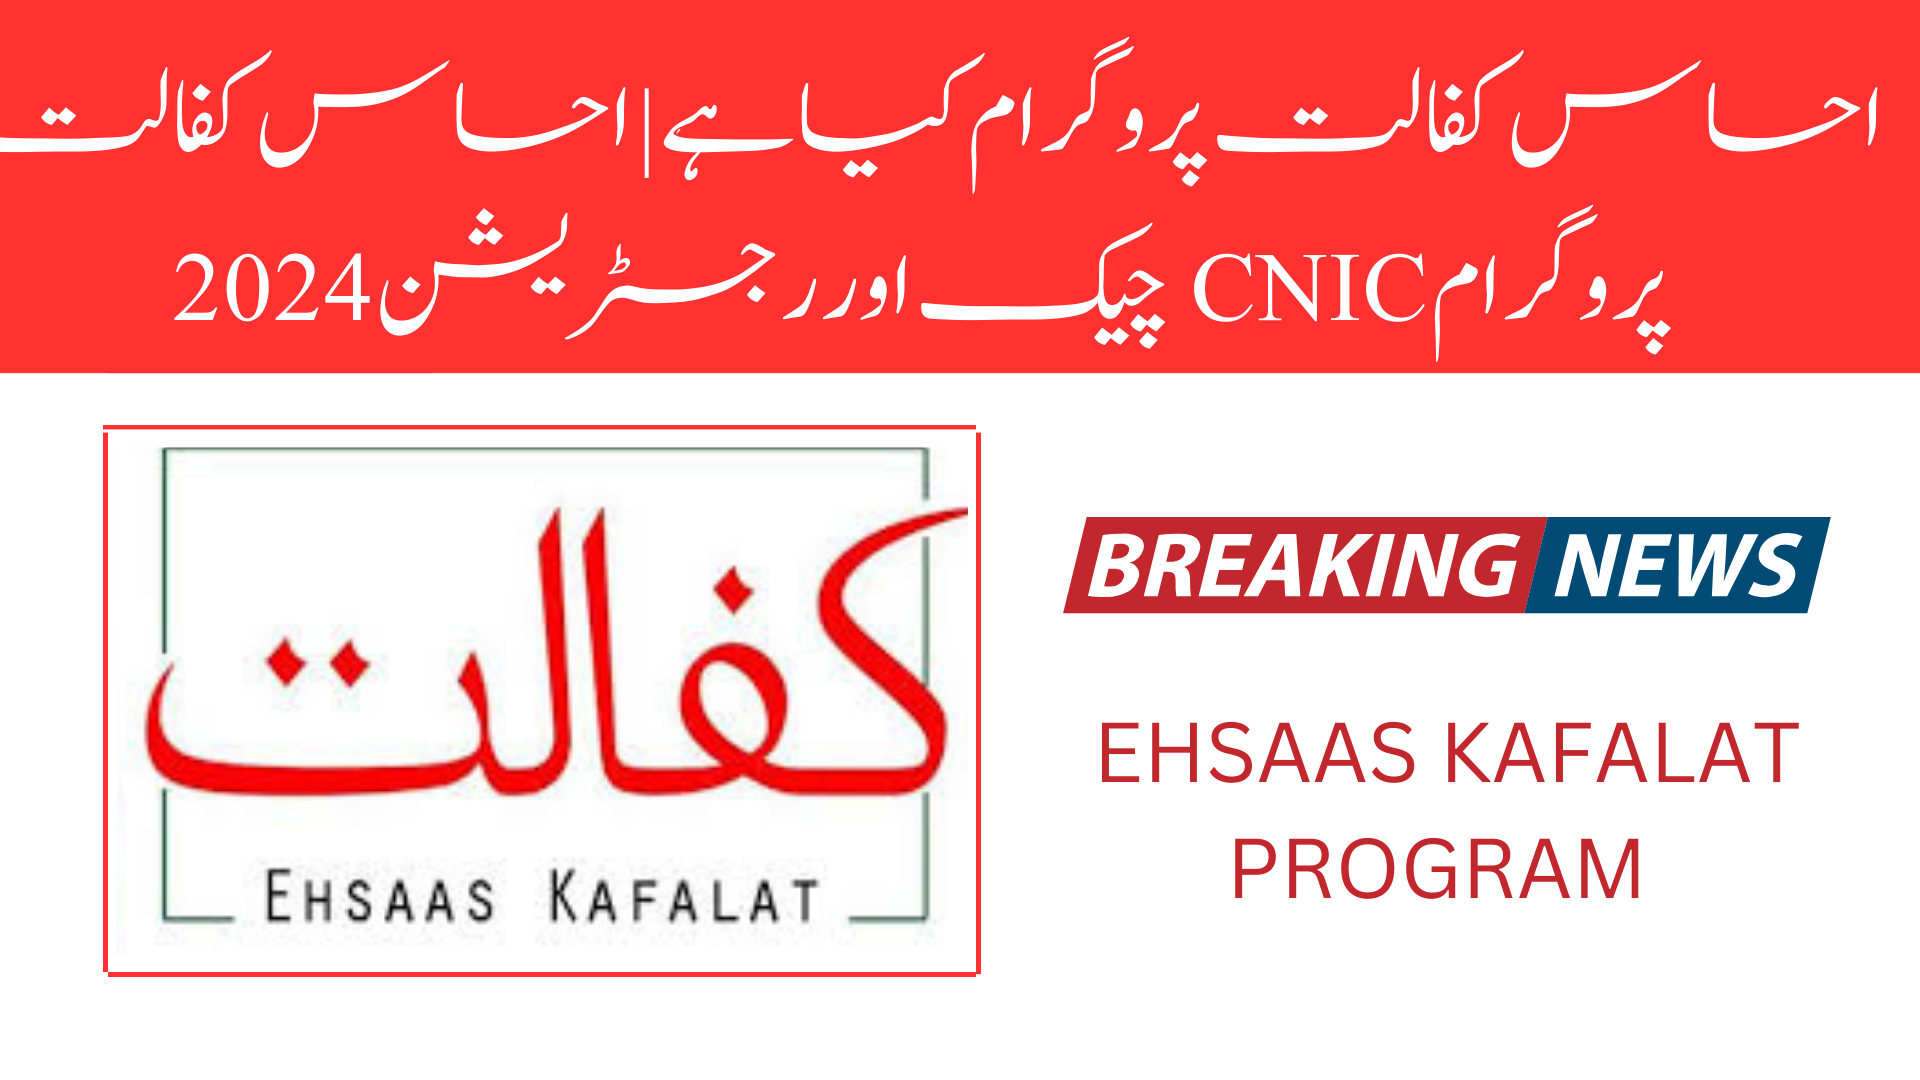 What is Ehsaas Kafalat Program